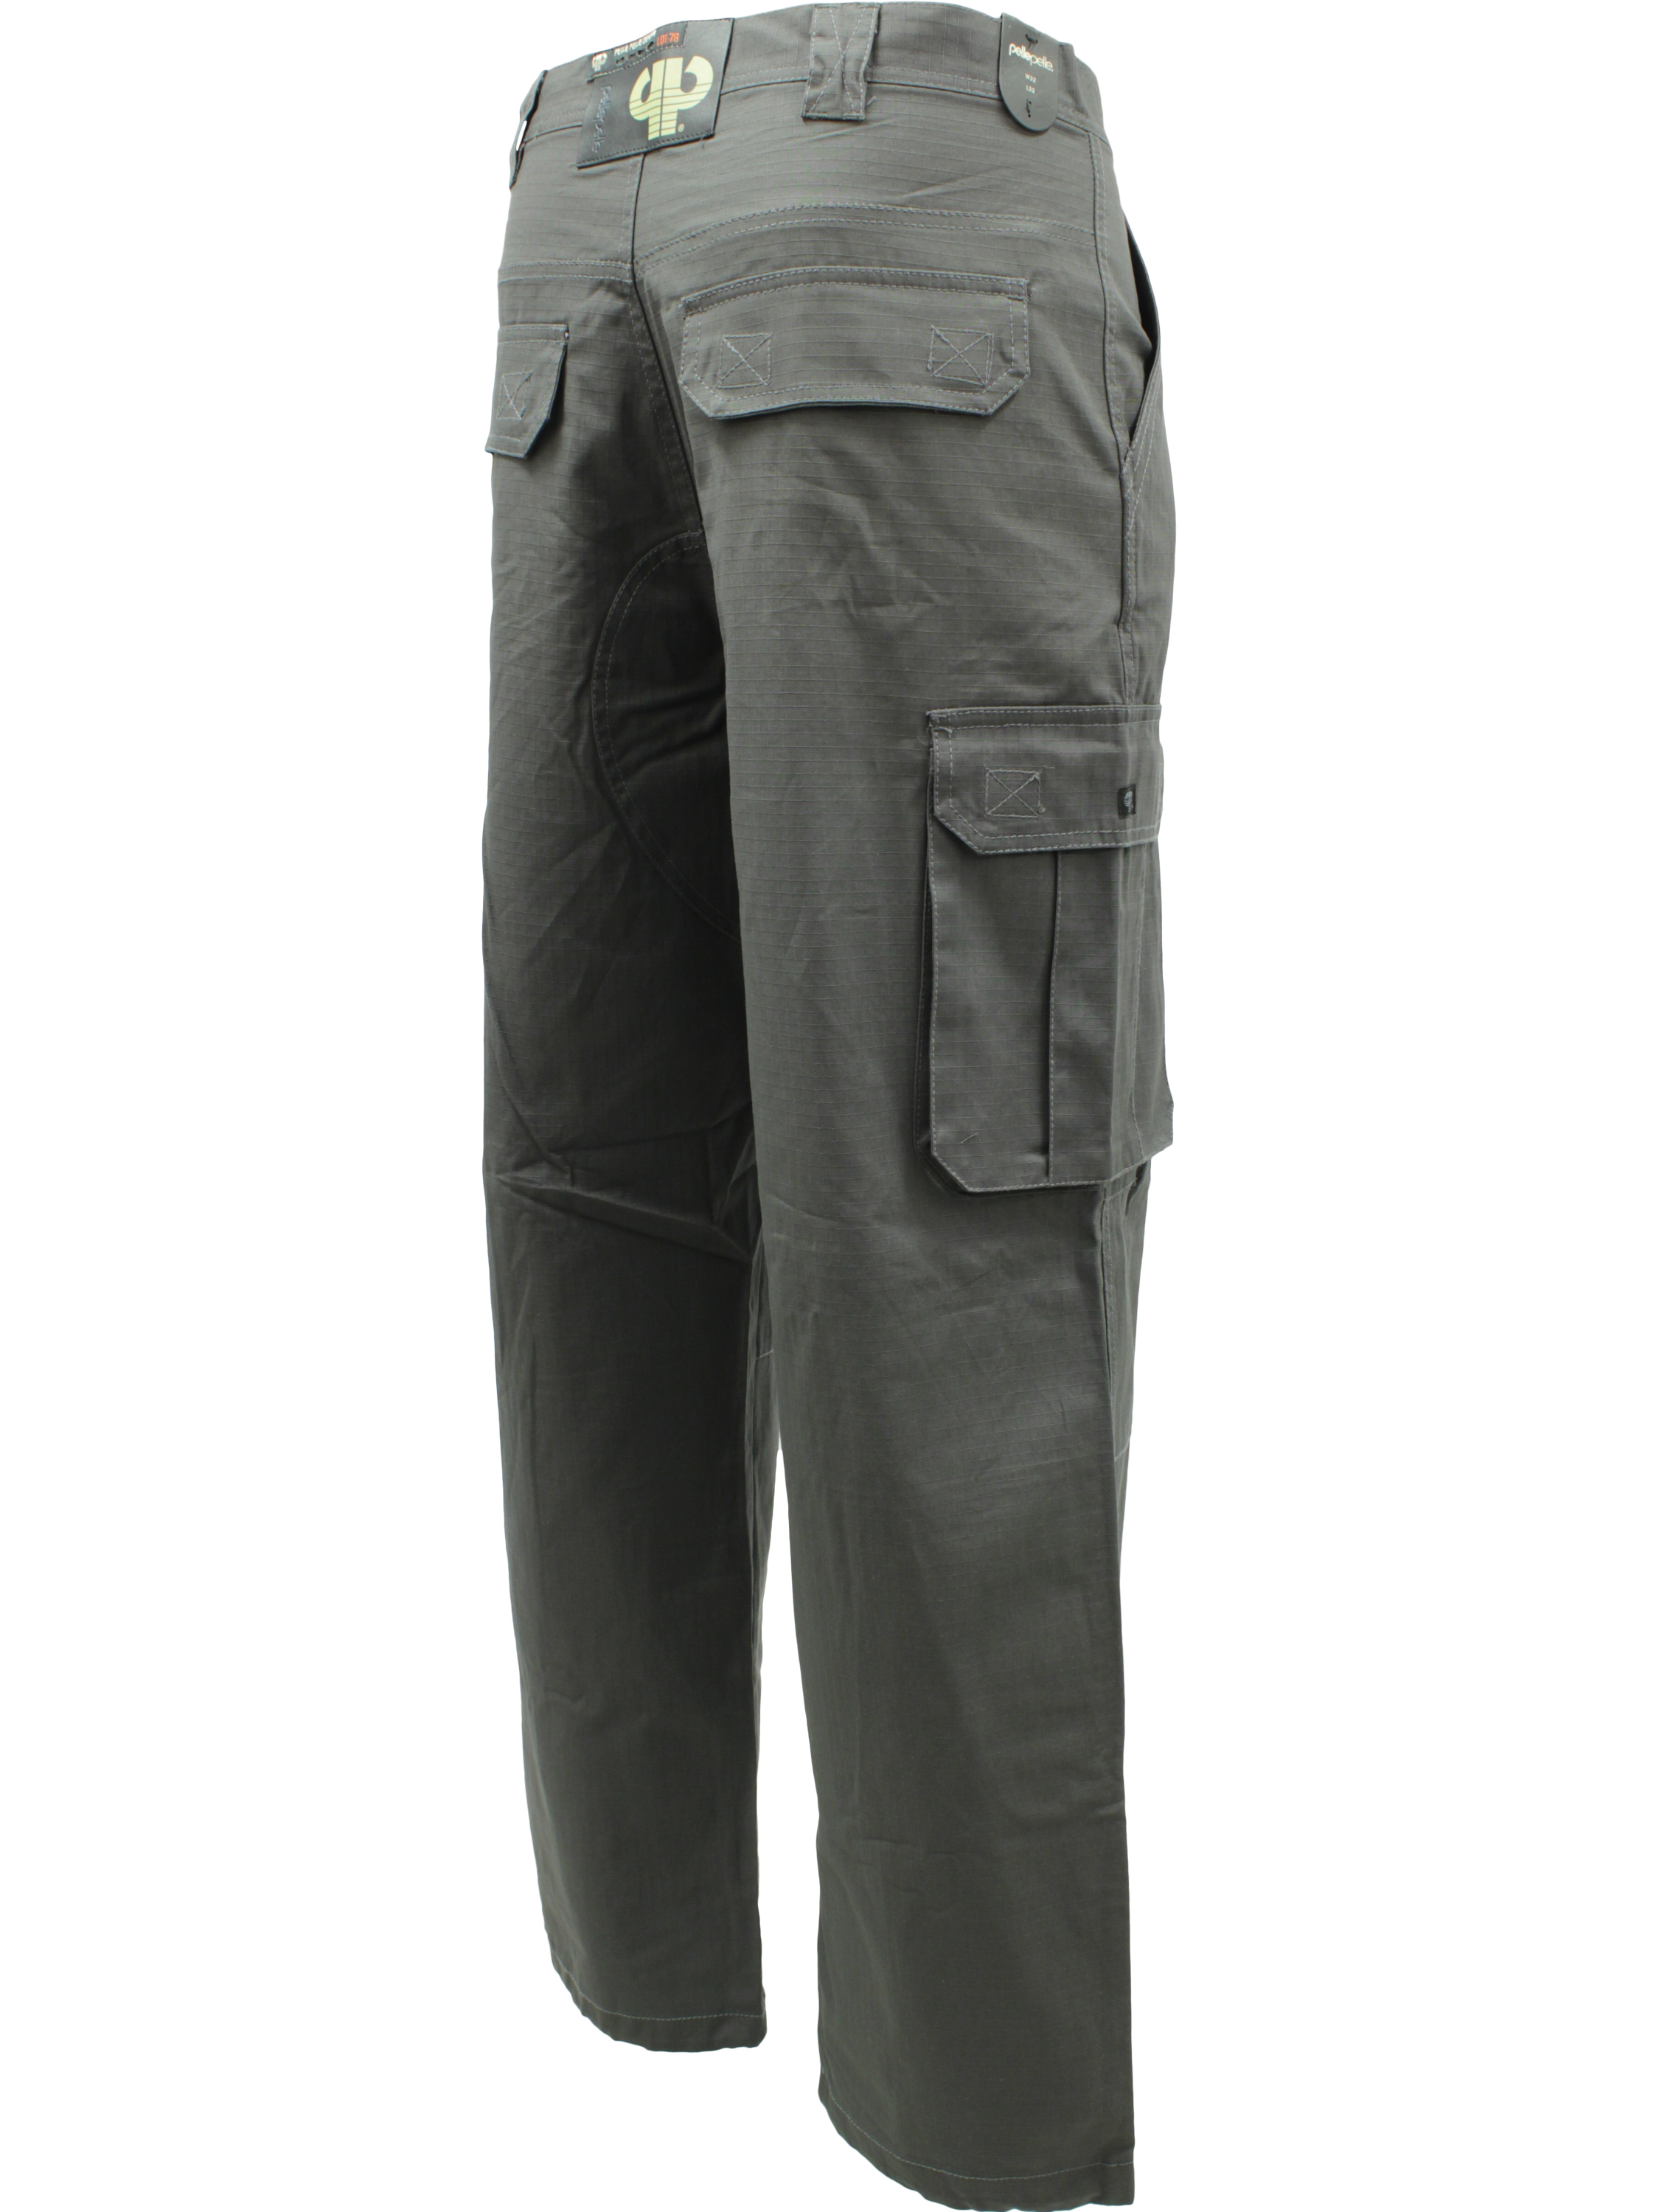 Buy PellePelle 'Basic Cargo' Pants - Charcoal